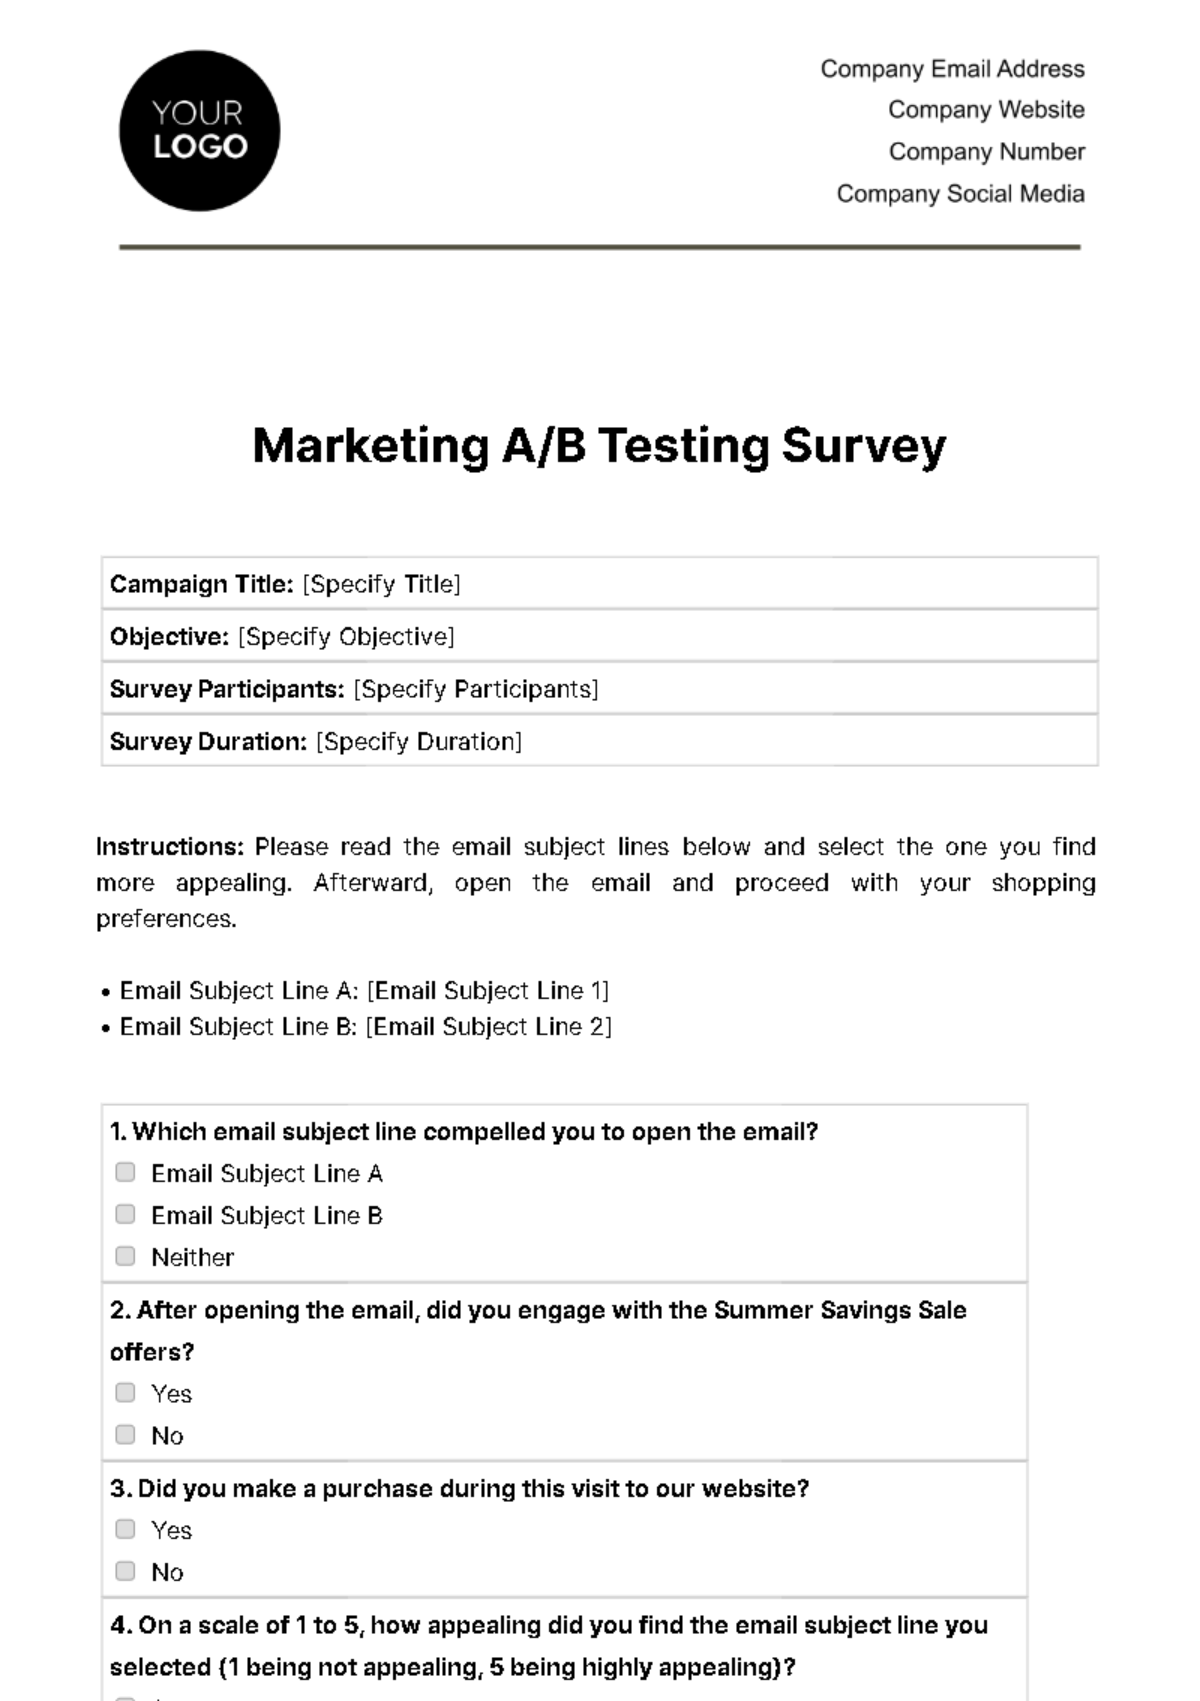 Free Marketing A/B Testing Survey Template